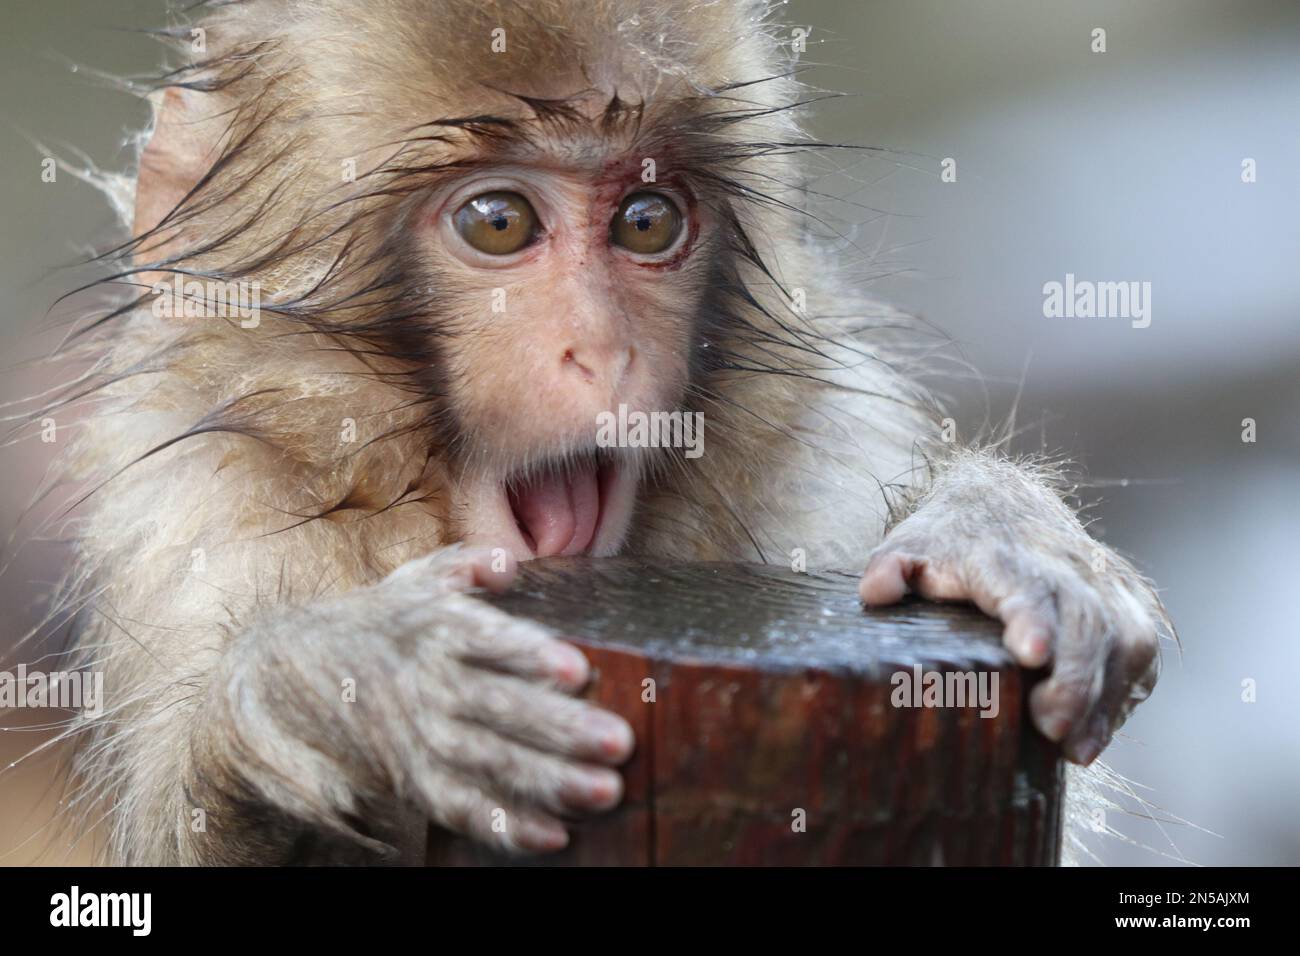 macaco japonés o mono de nieve con bebé 6965989 Foto de stock en Vecteezy